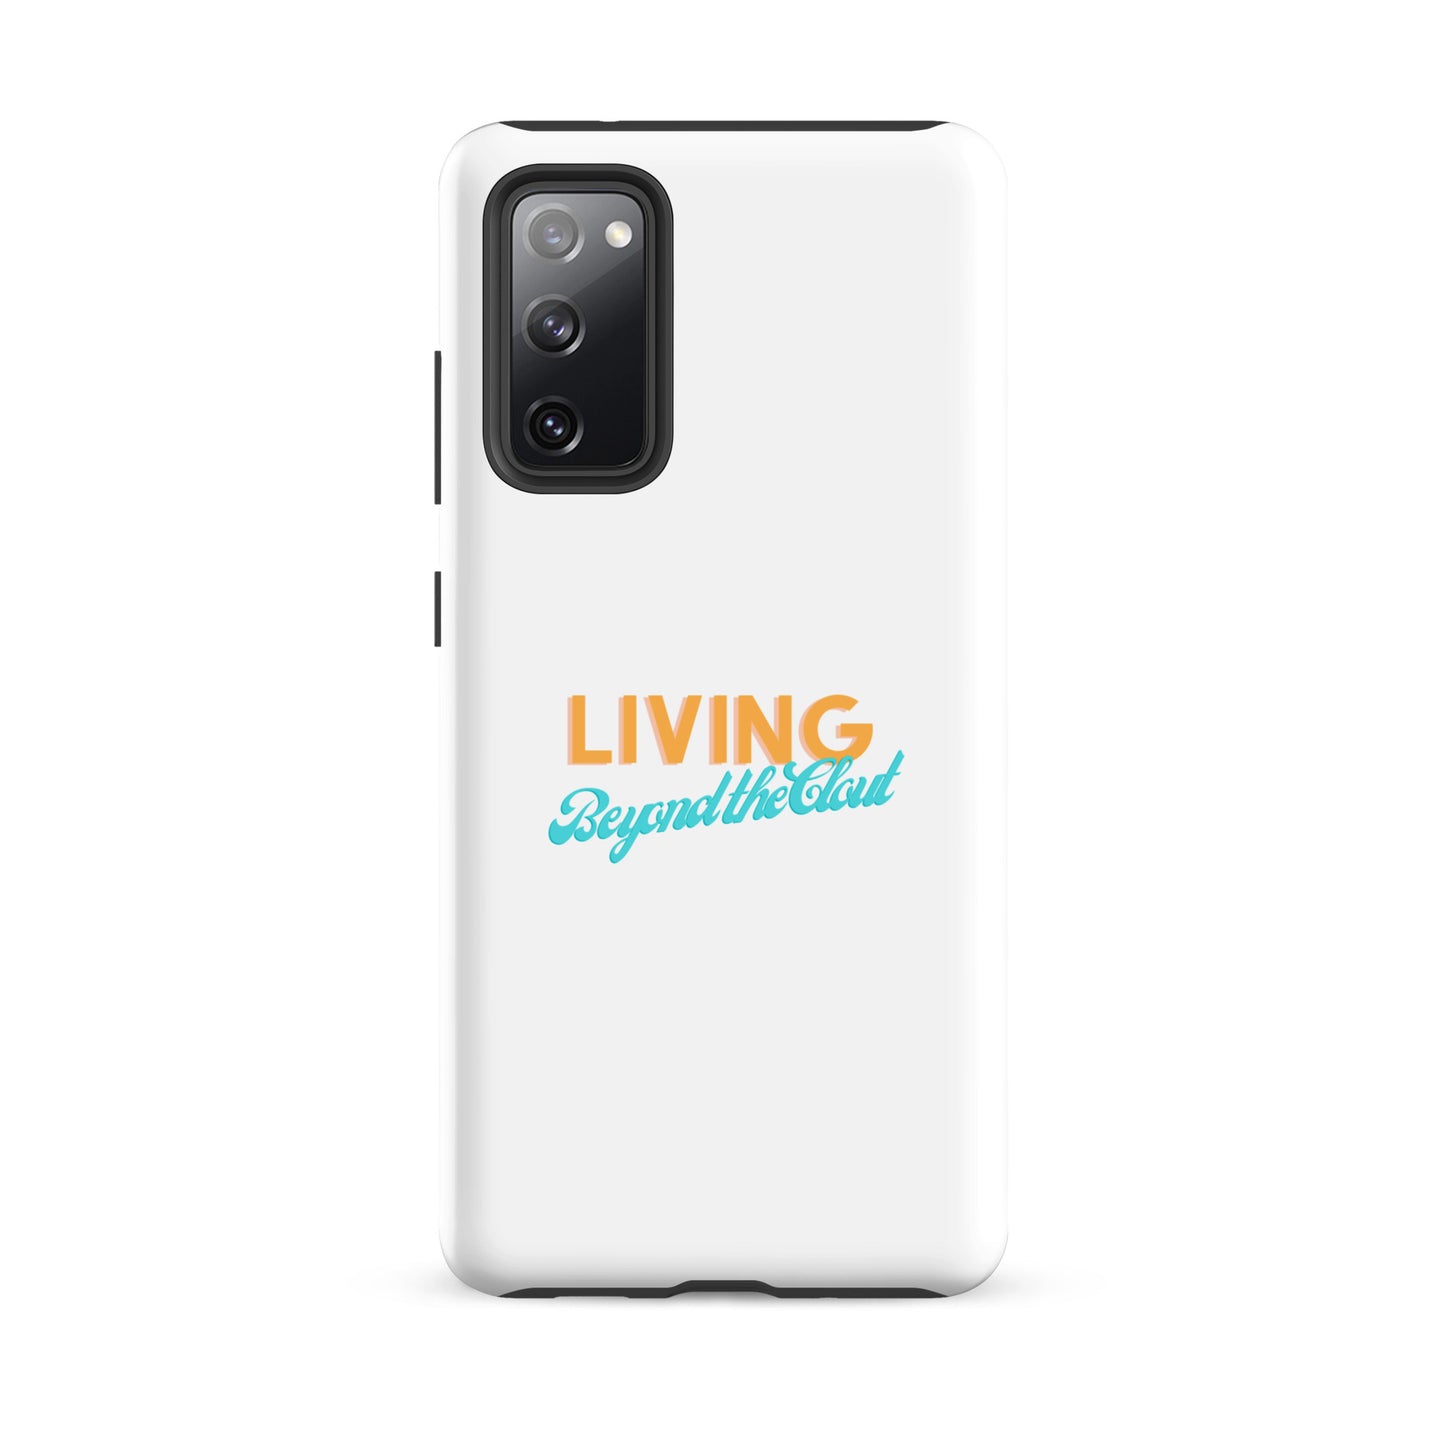 Living case for Samsung®